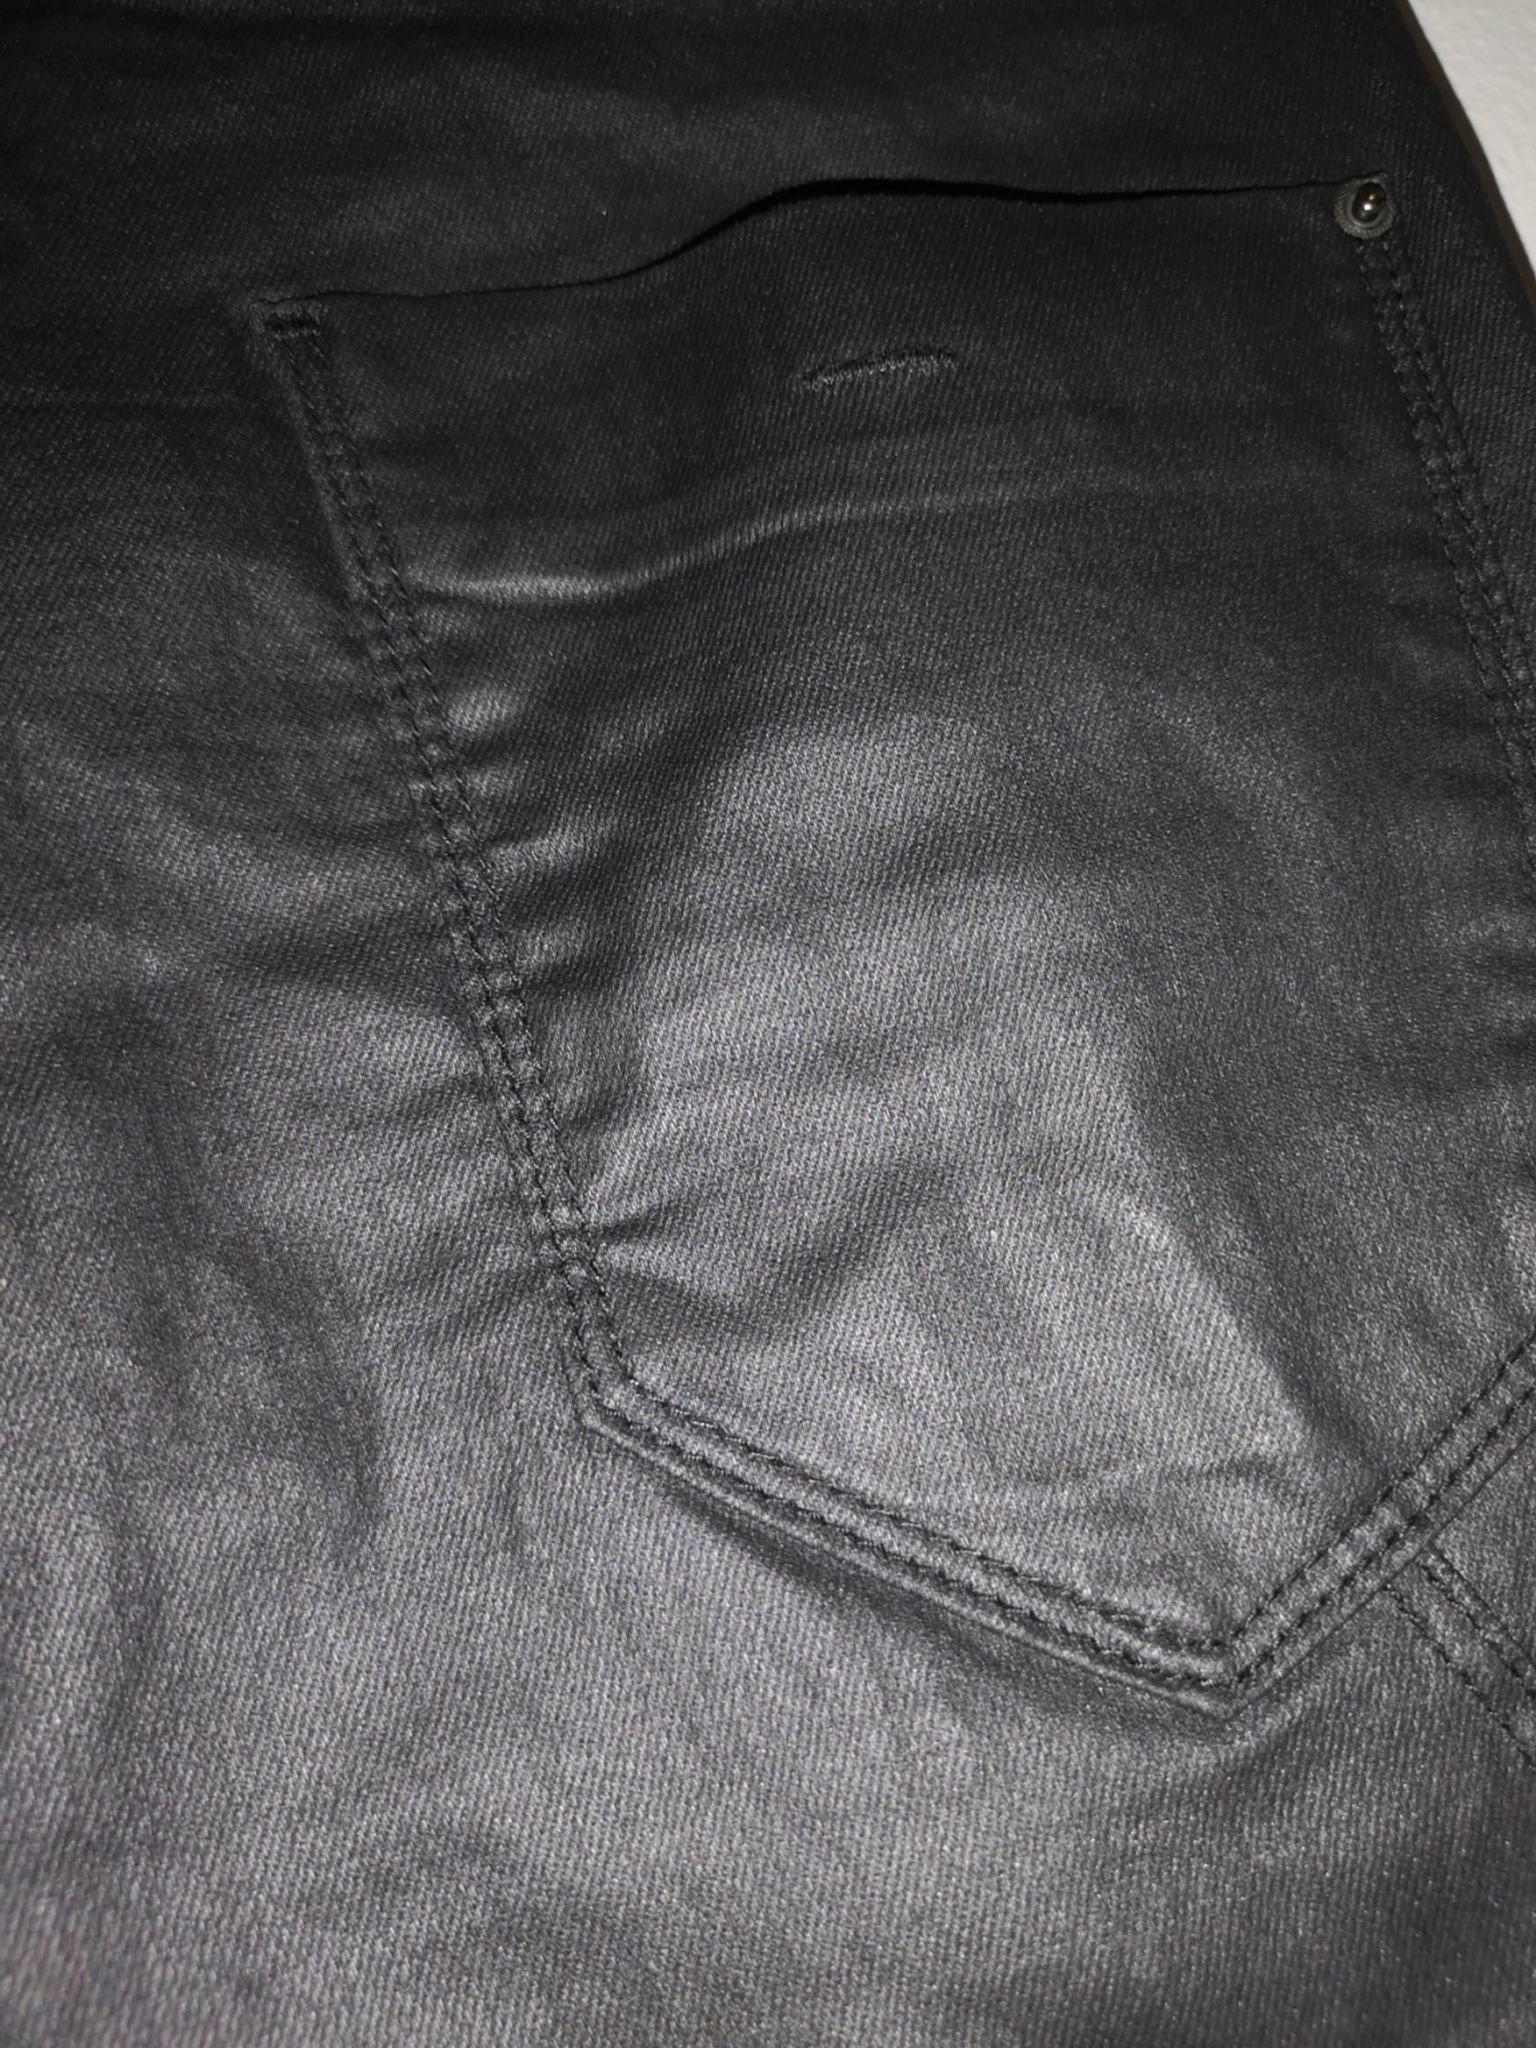 leather look jeans zara